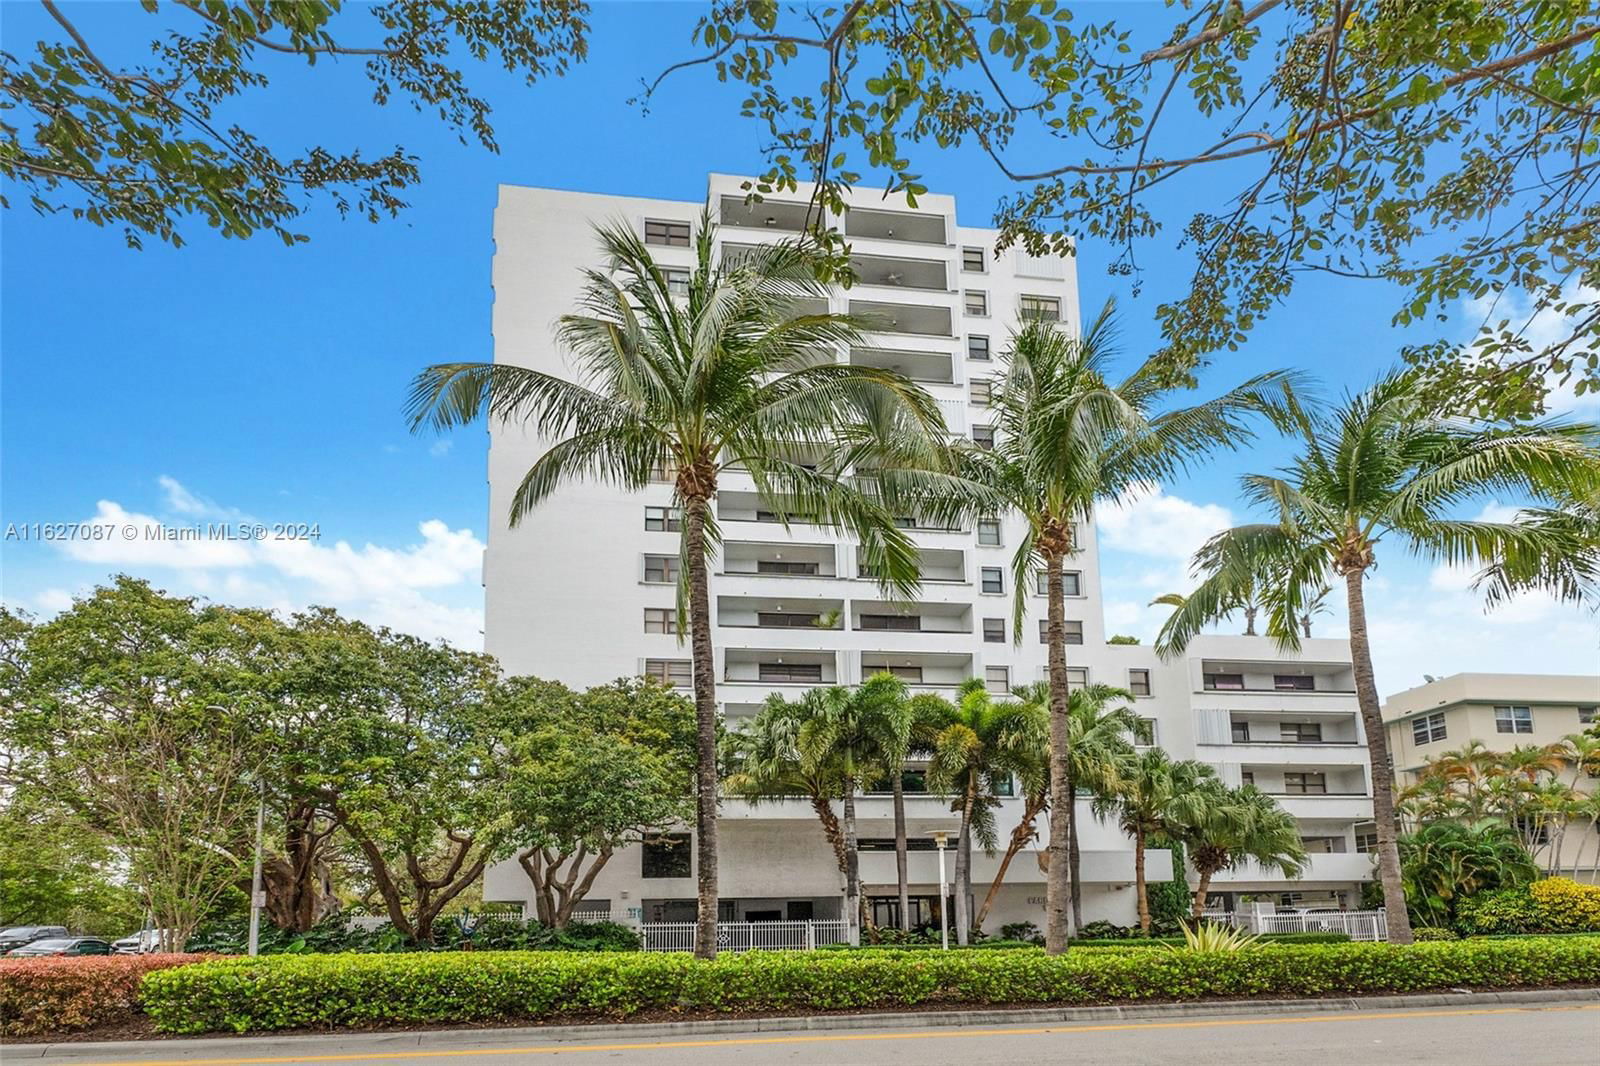 Real estate property located at 1775 Washington Ave #7C, Miami-Dade County, PARC PLAZA CONDO, Miami Beach, FL